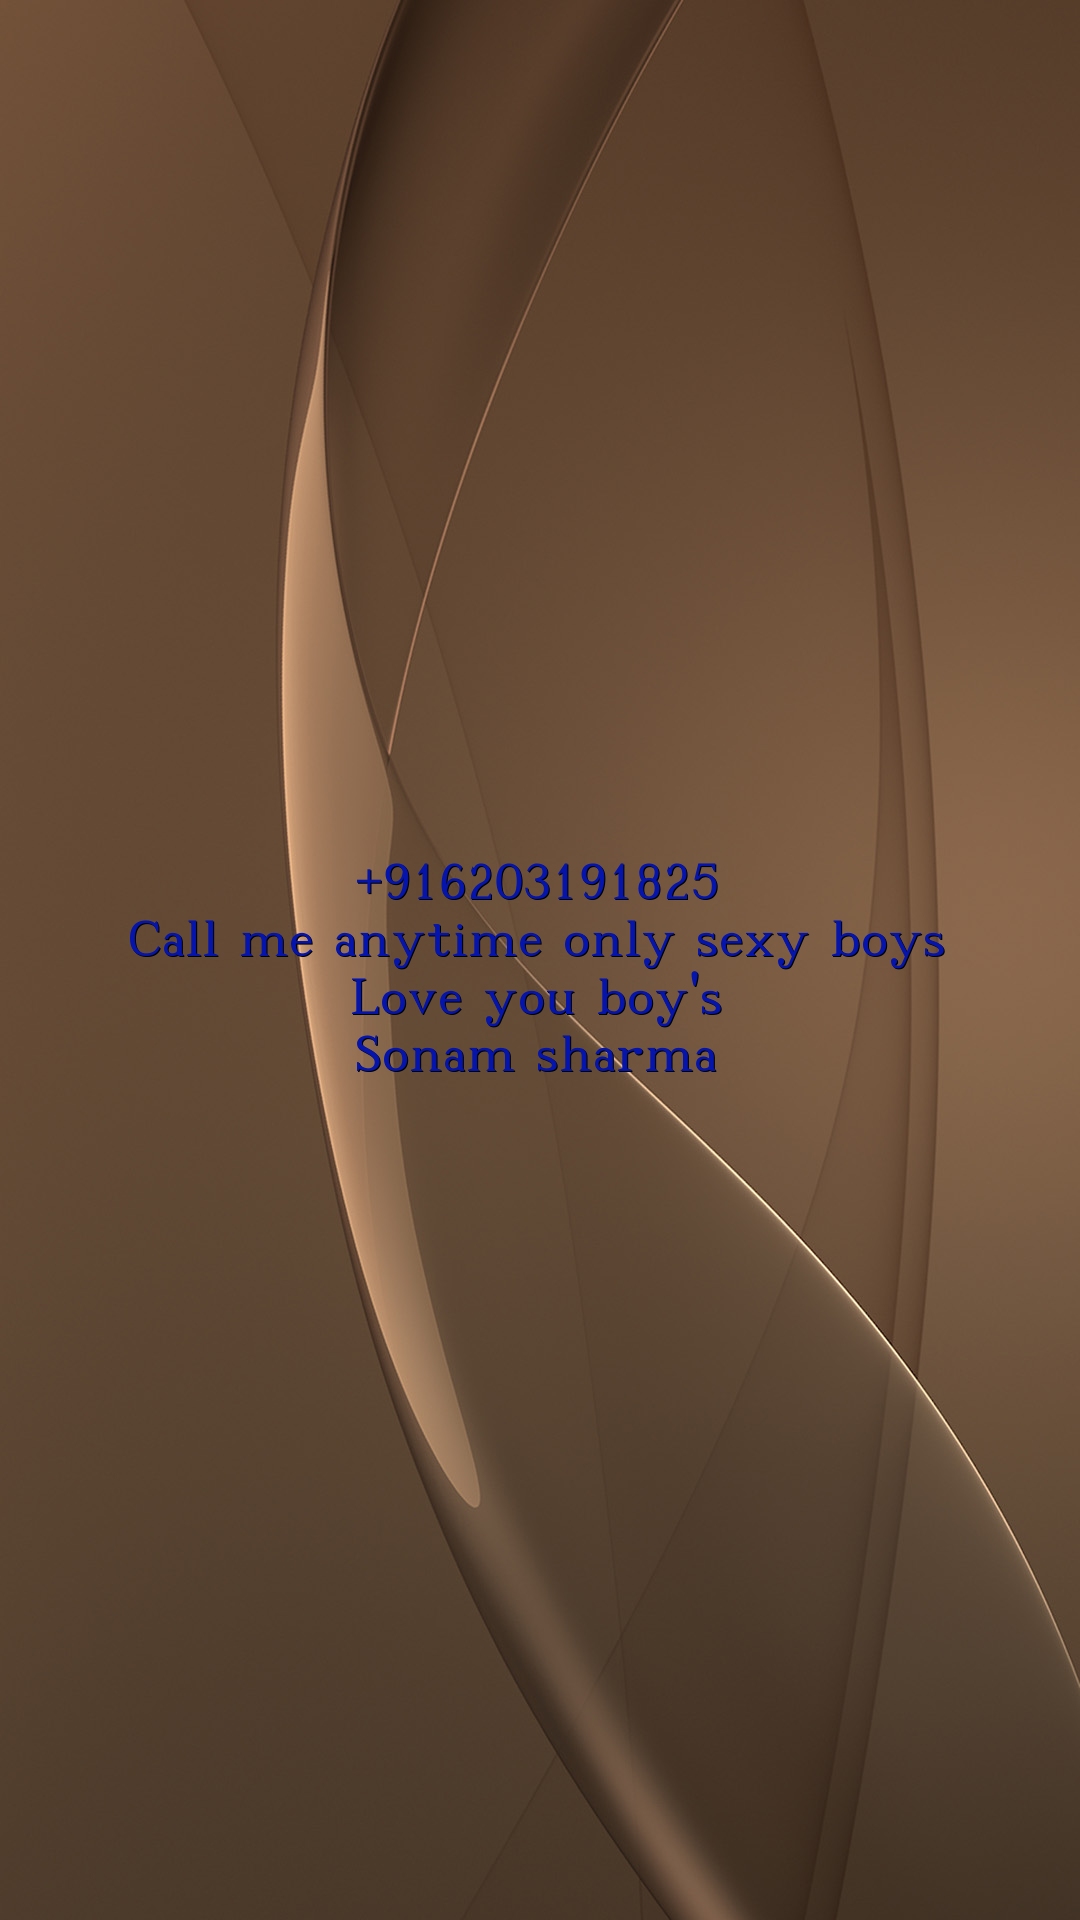 +916203191825 Call me anytime only sexy boys Love you boy's Sonam sharma